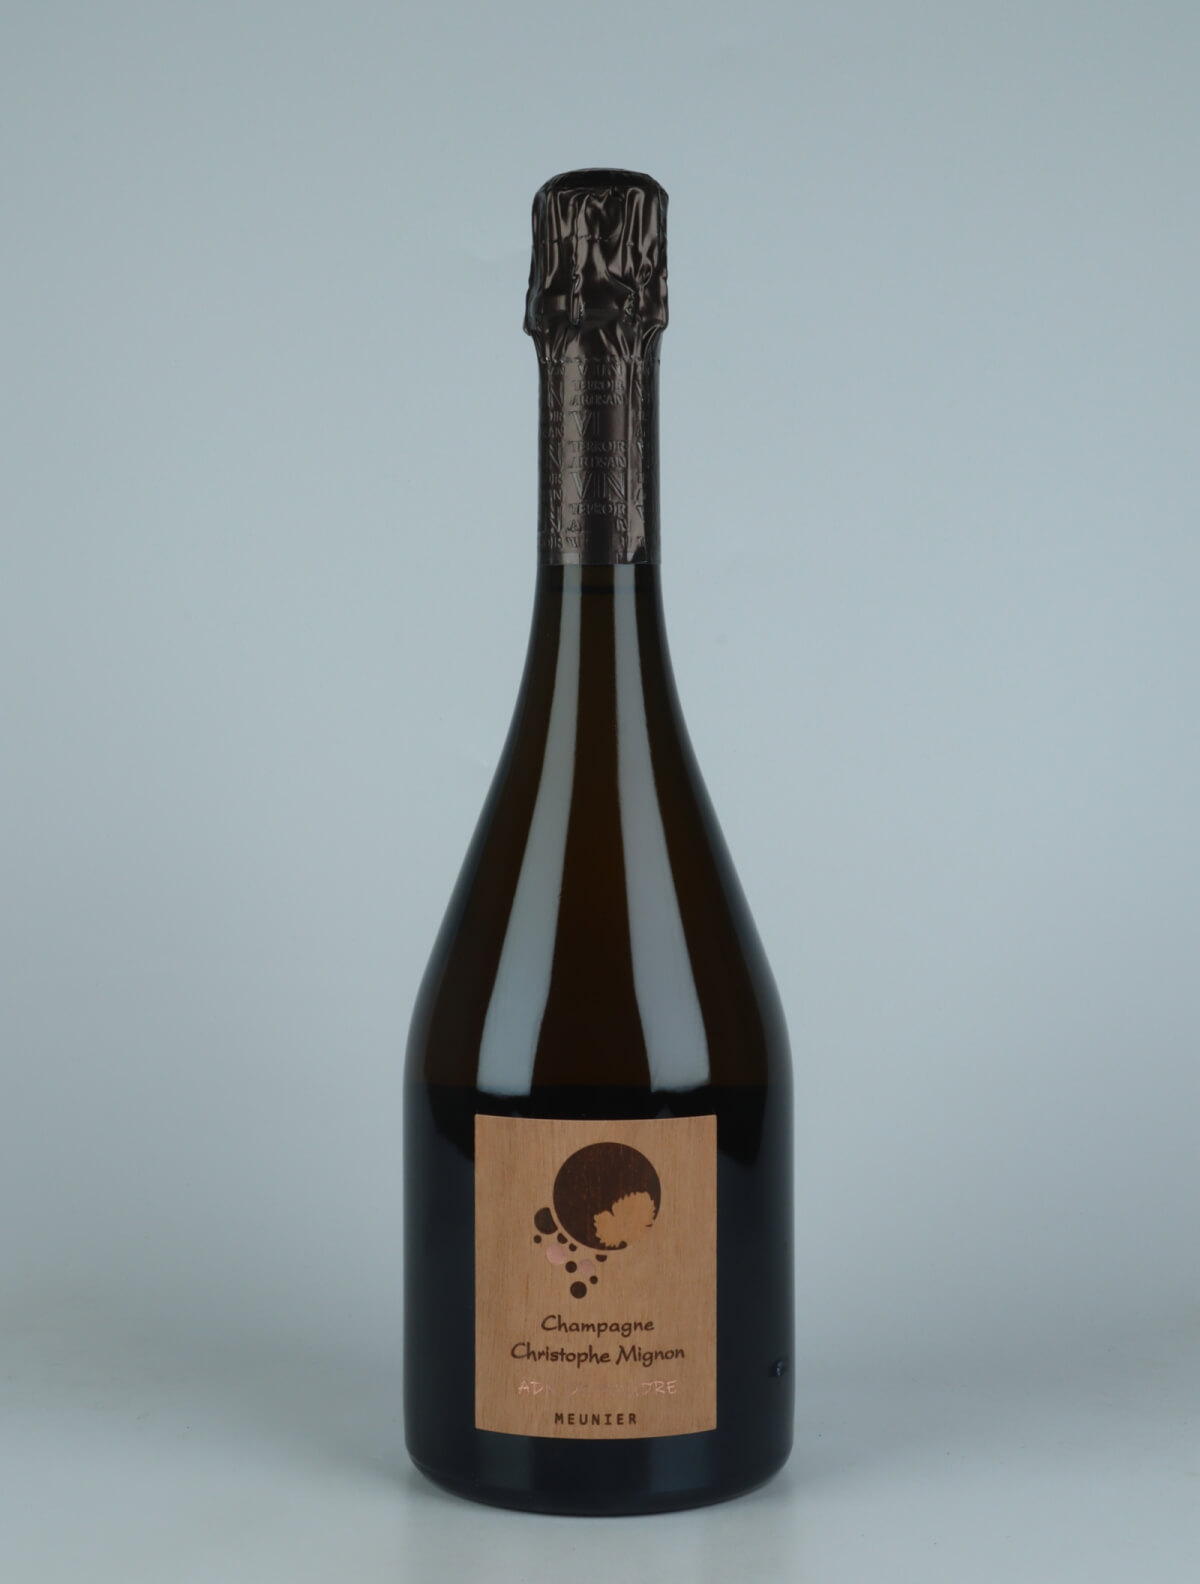 A bottle 2017 ADN de Foudre Meunier Brut Nature Sparkling from Christophe Mignon, Champagne in France